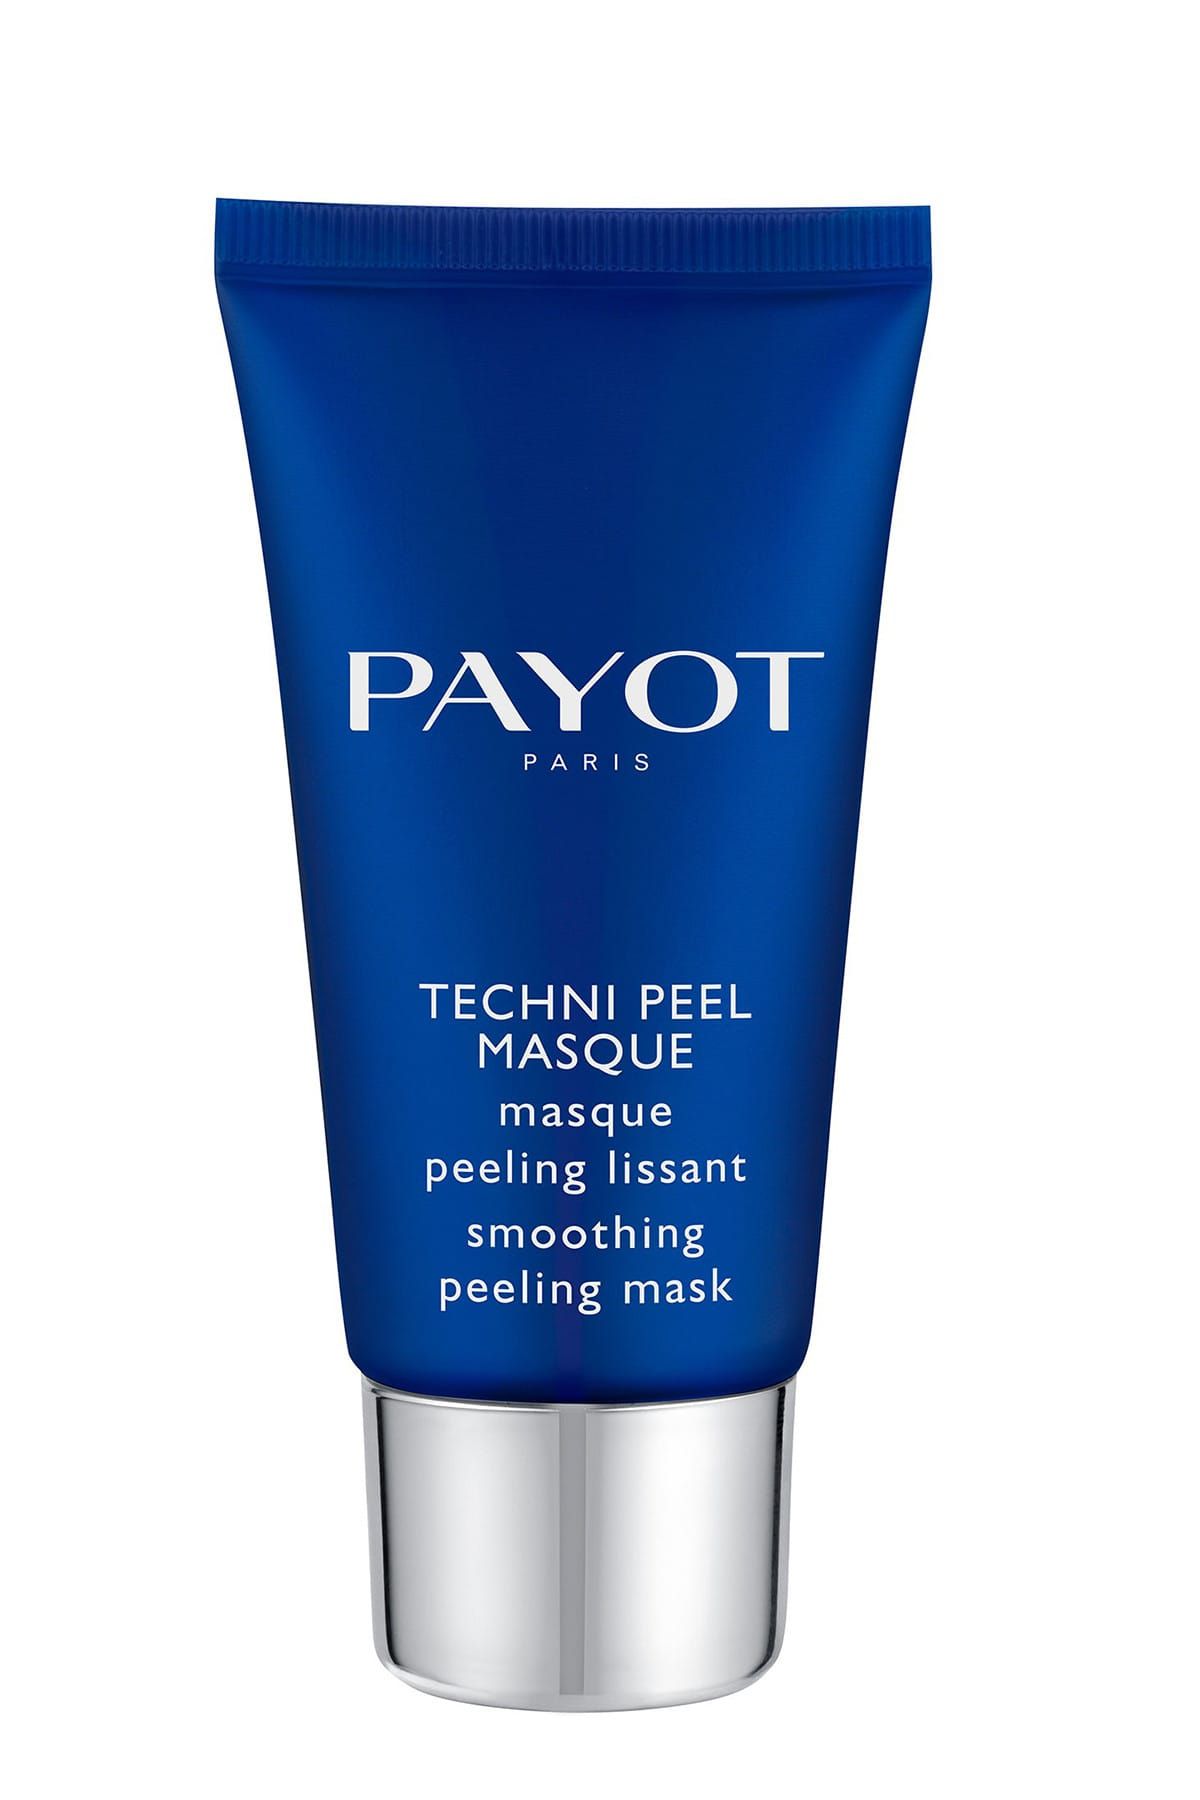 Payot Maske - Techni Peel Masque 50 ml 3390150544132